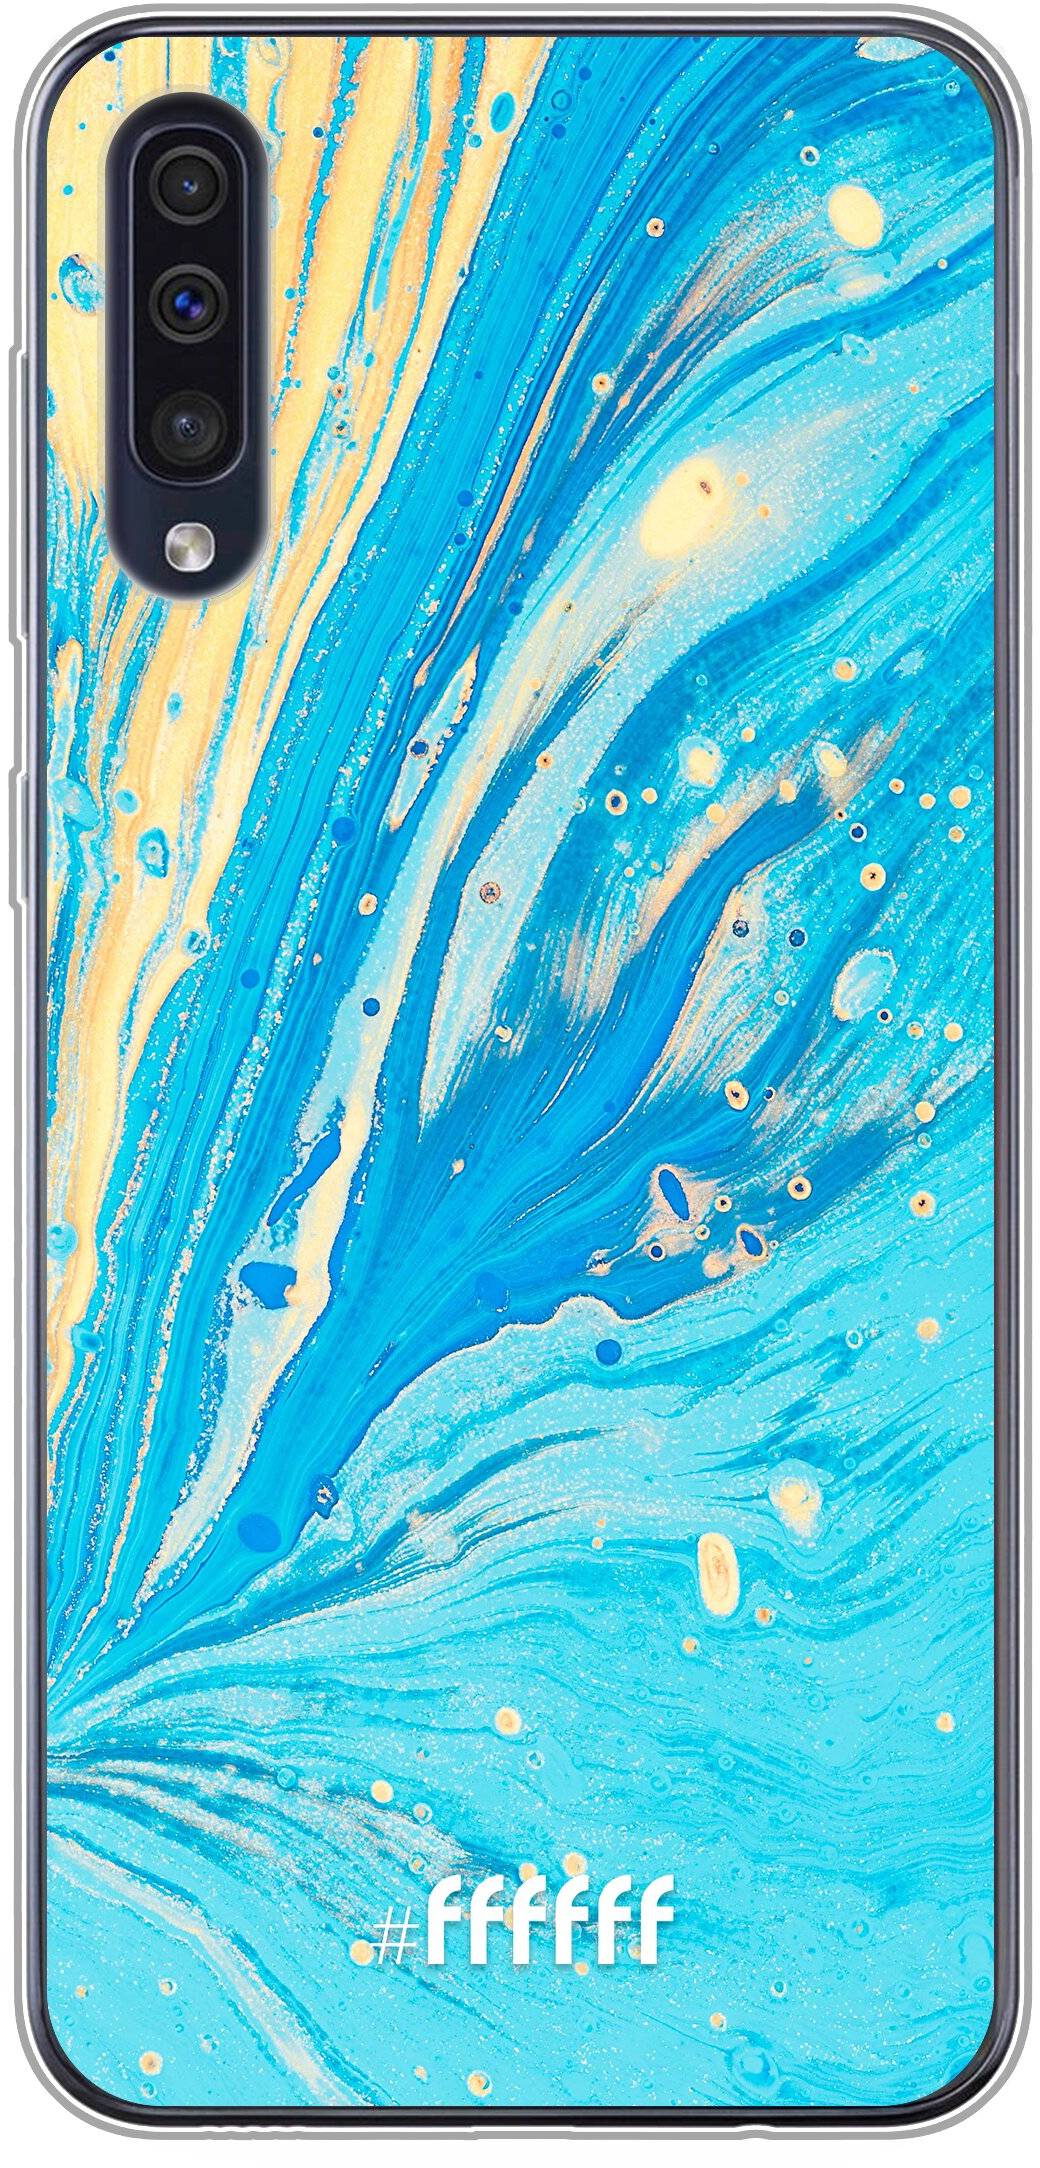 Endless Azure Galaxy A50s